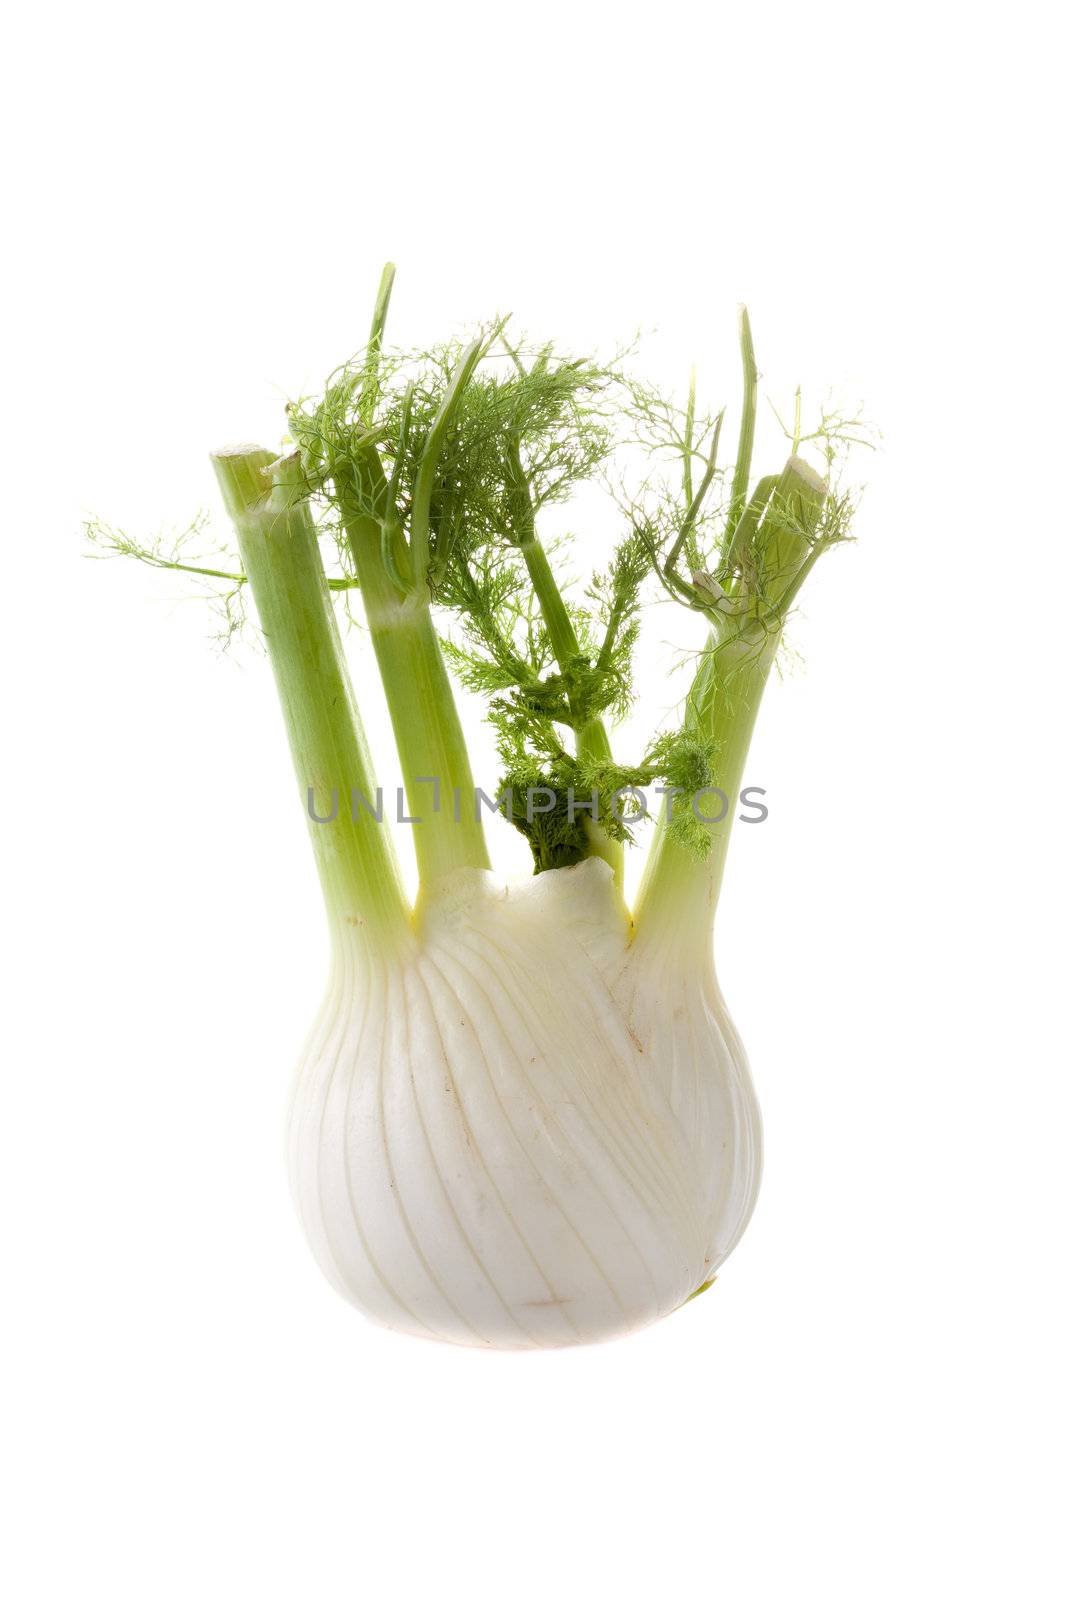 Fresh fennel on white background isolated